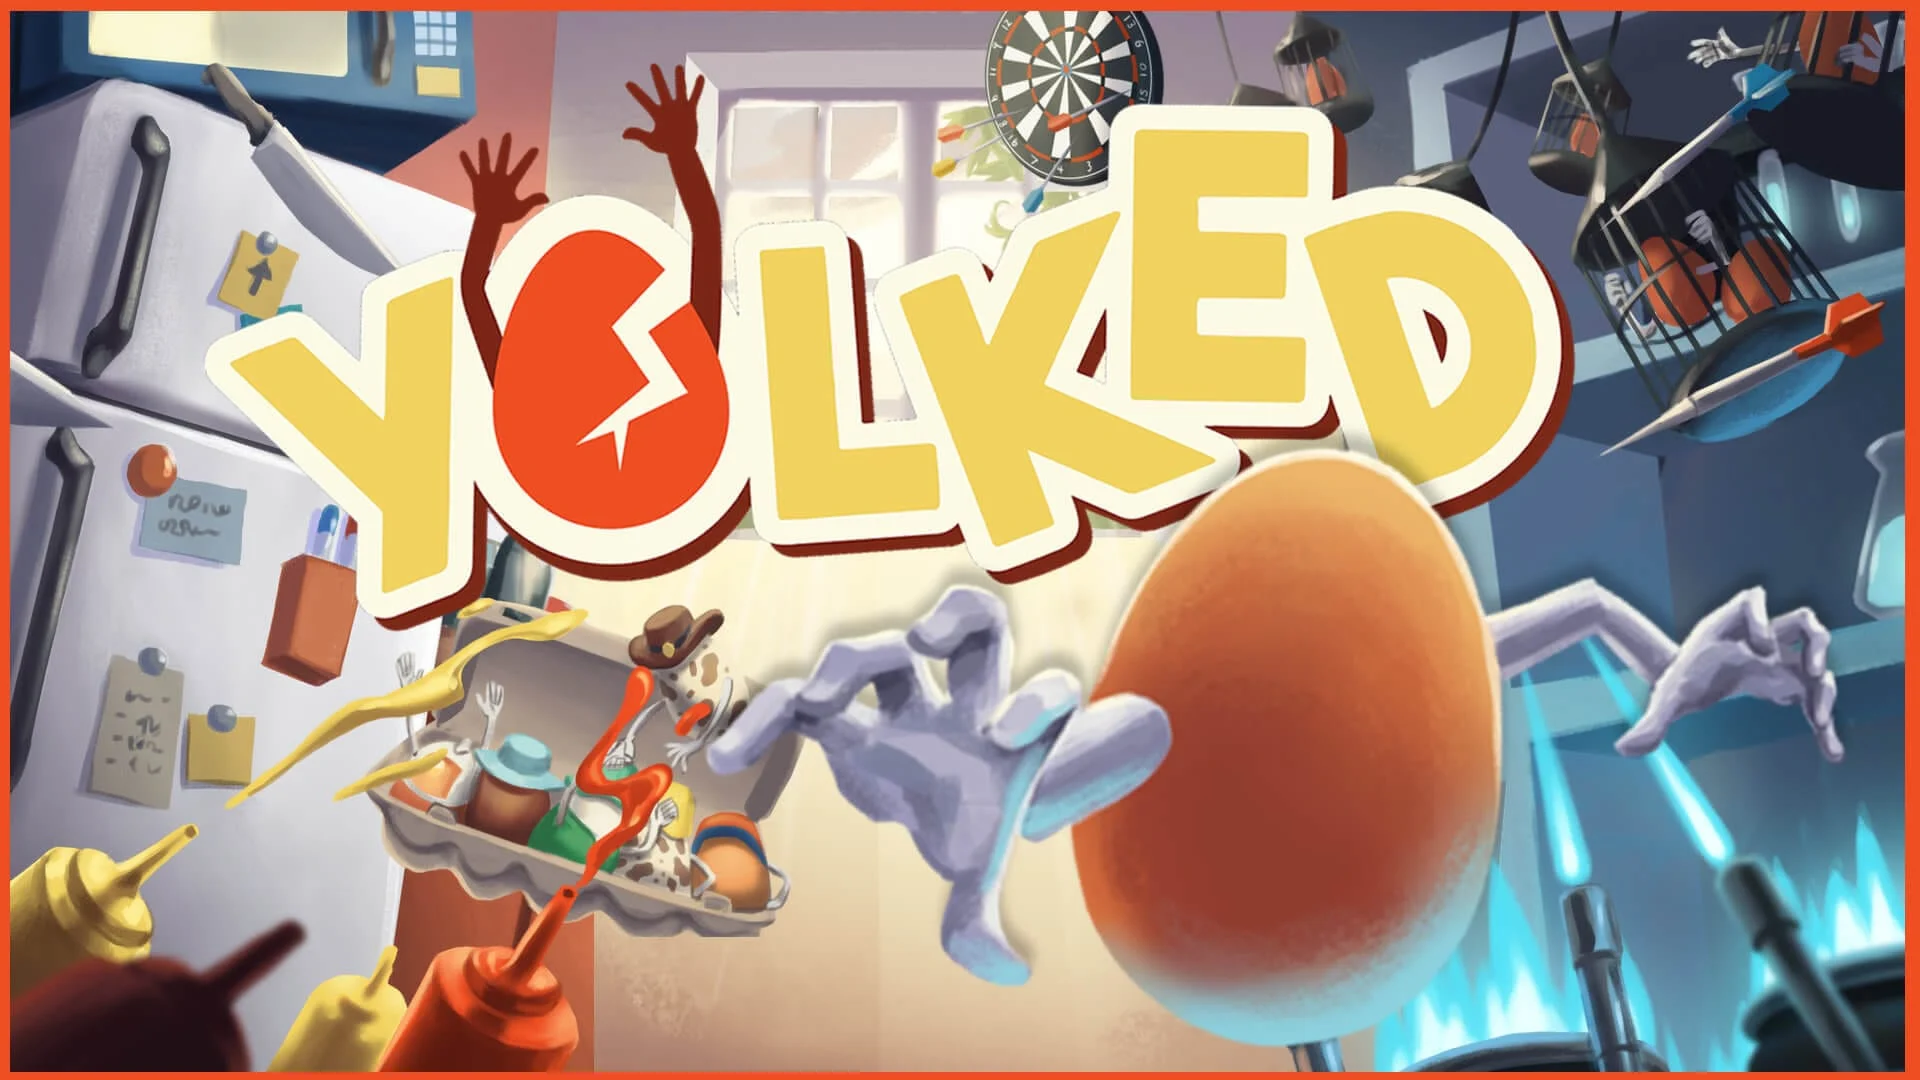 YOLKED - The Egg Game